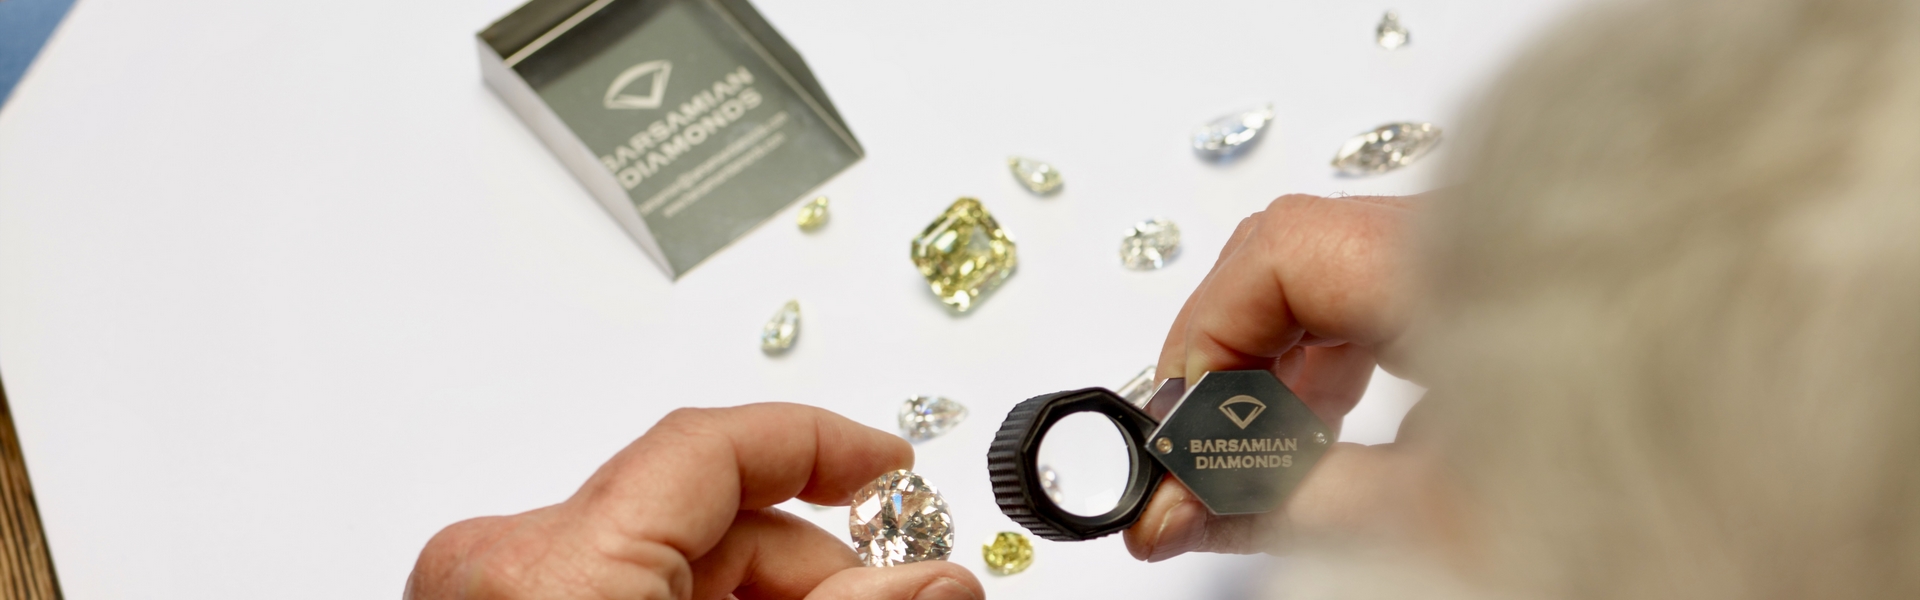 Barsamina Service Diamonds Back